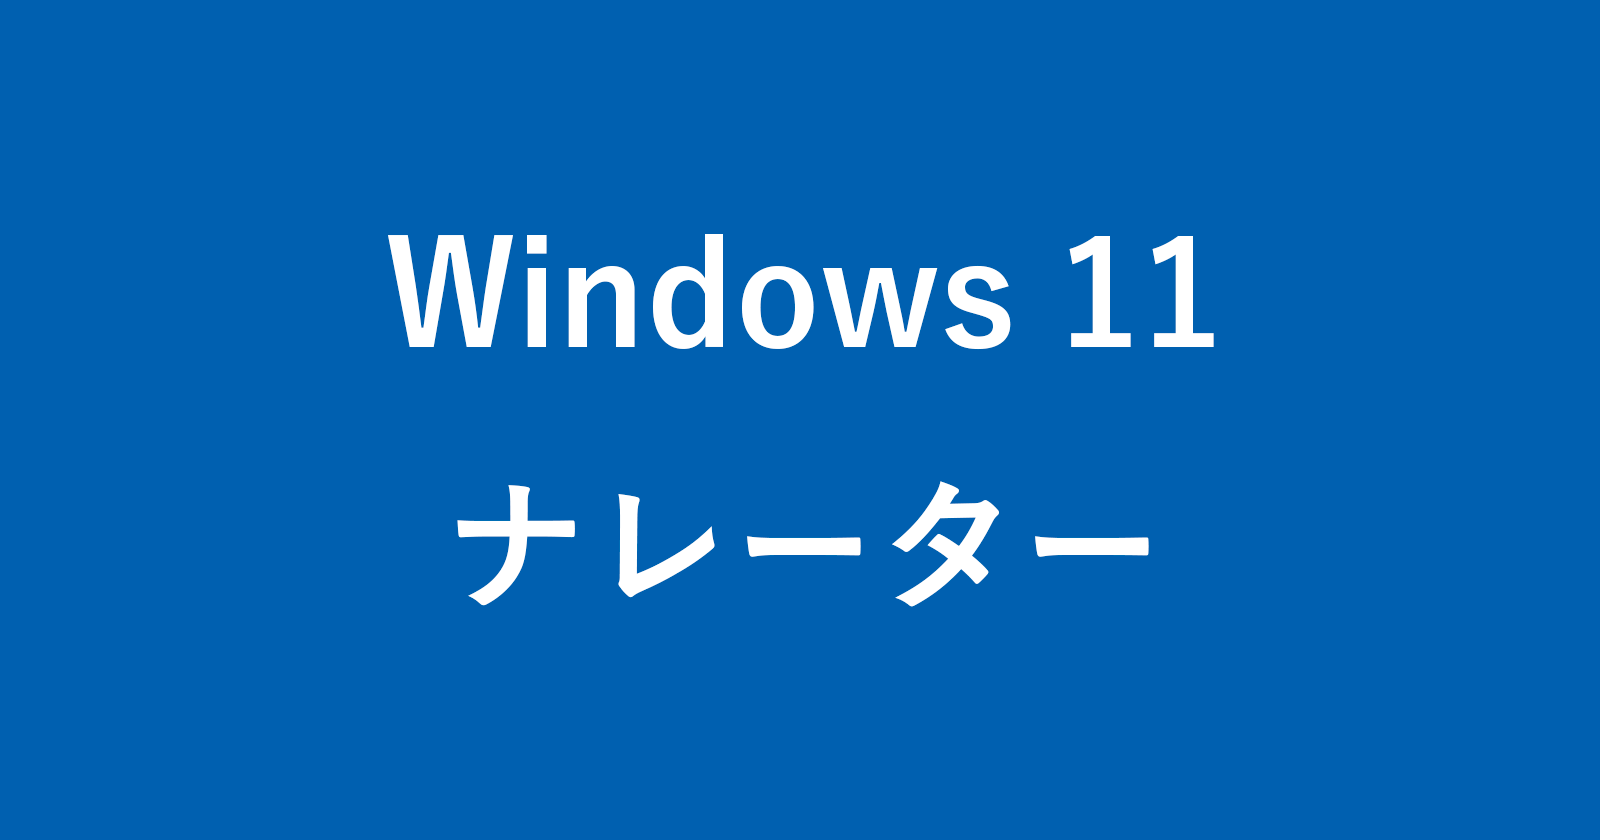 windows 11 narrator